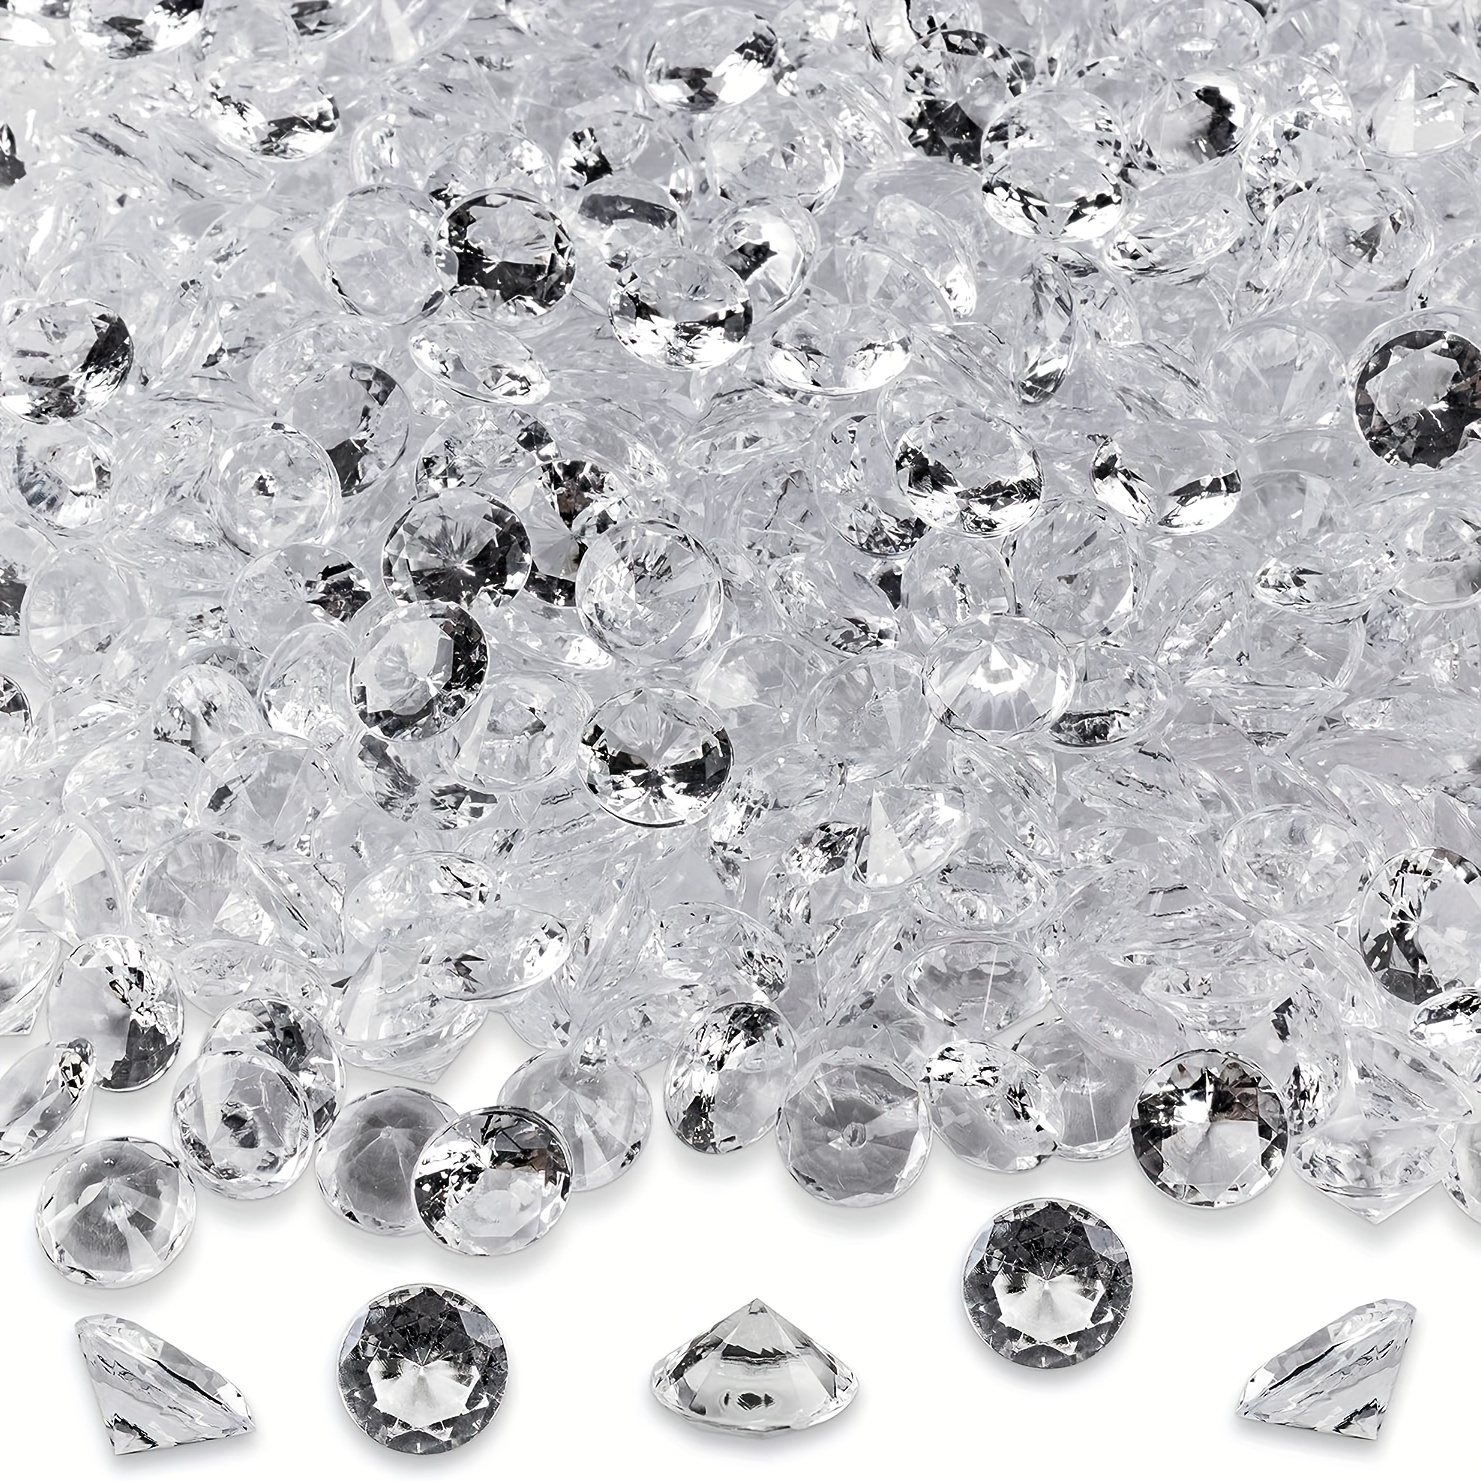 1600pcs Flat Rhinestones Glass Diamonds Gemstones For DIY Crafts, Eye  Makeup, Mugs, Jewelry Making, Nail Art, Etc. 6 Sizes Ss6-ss20 Black